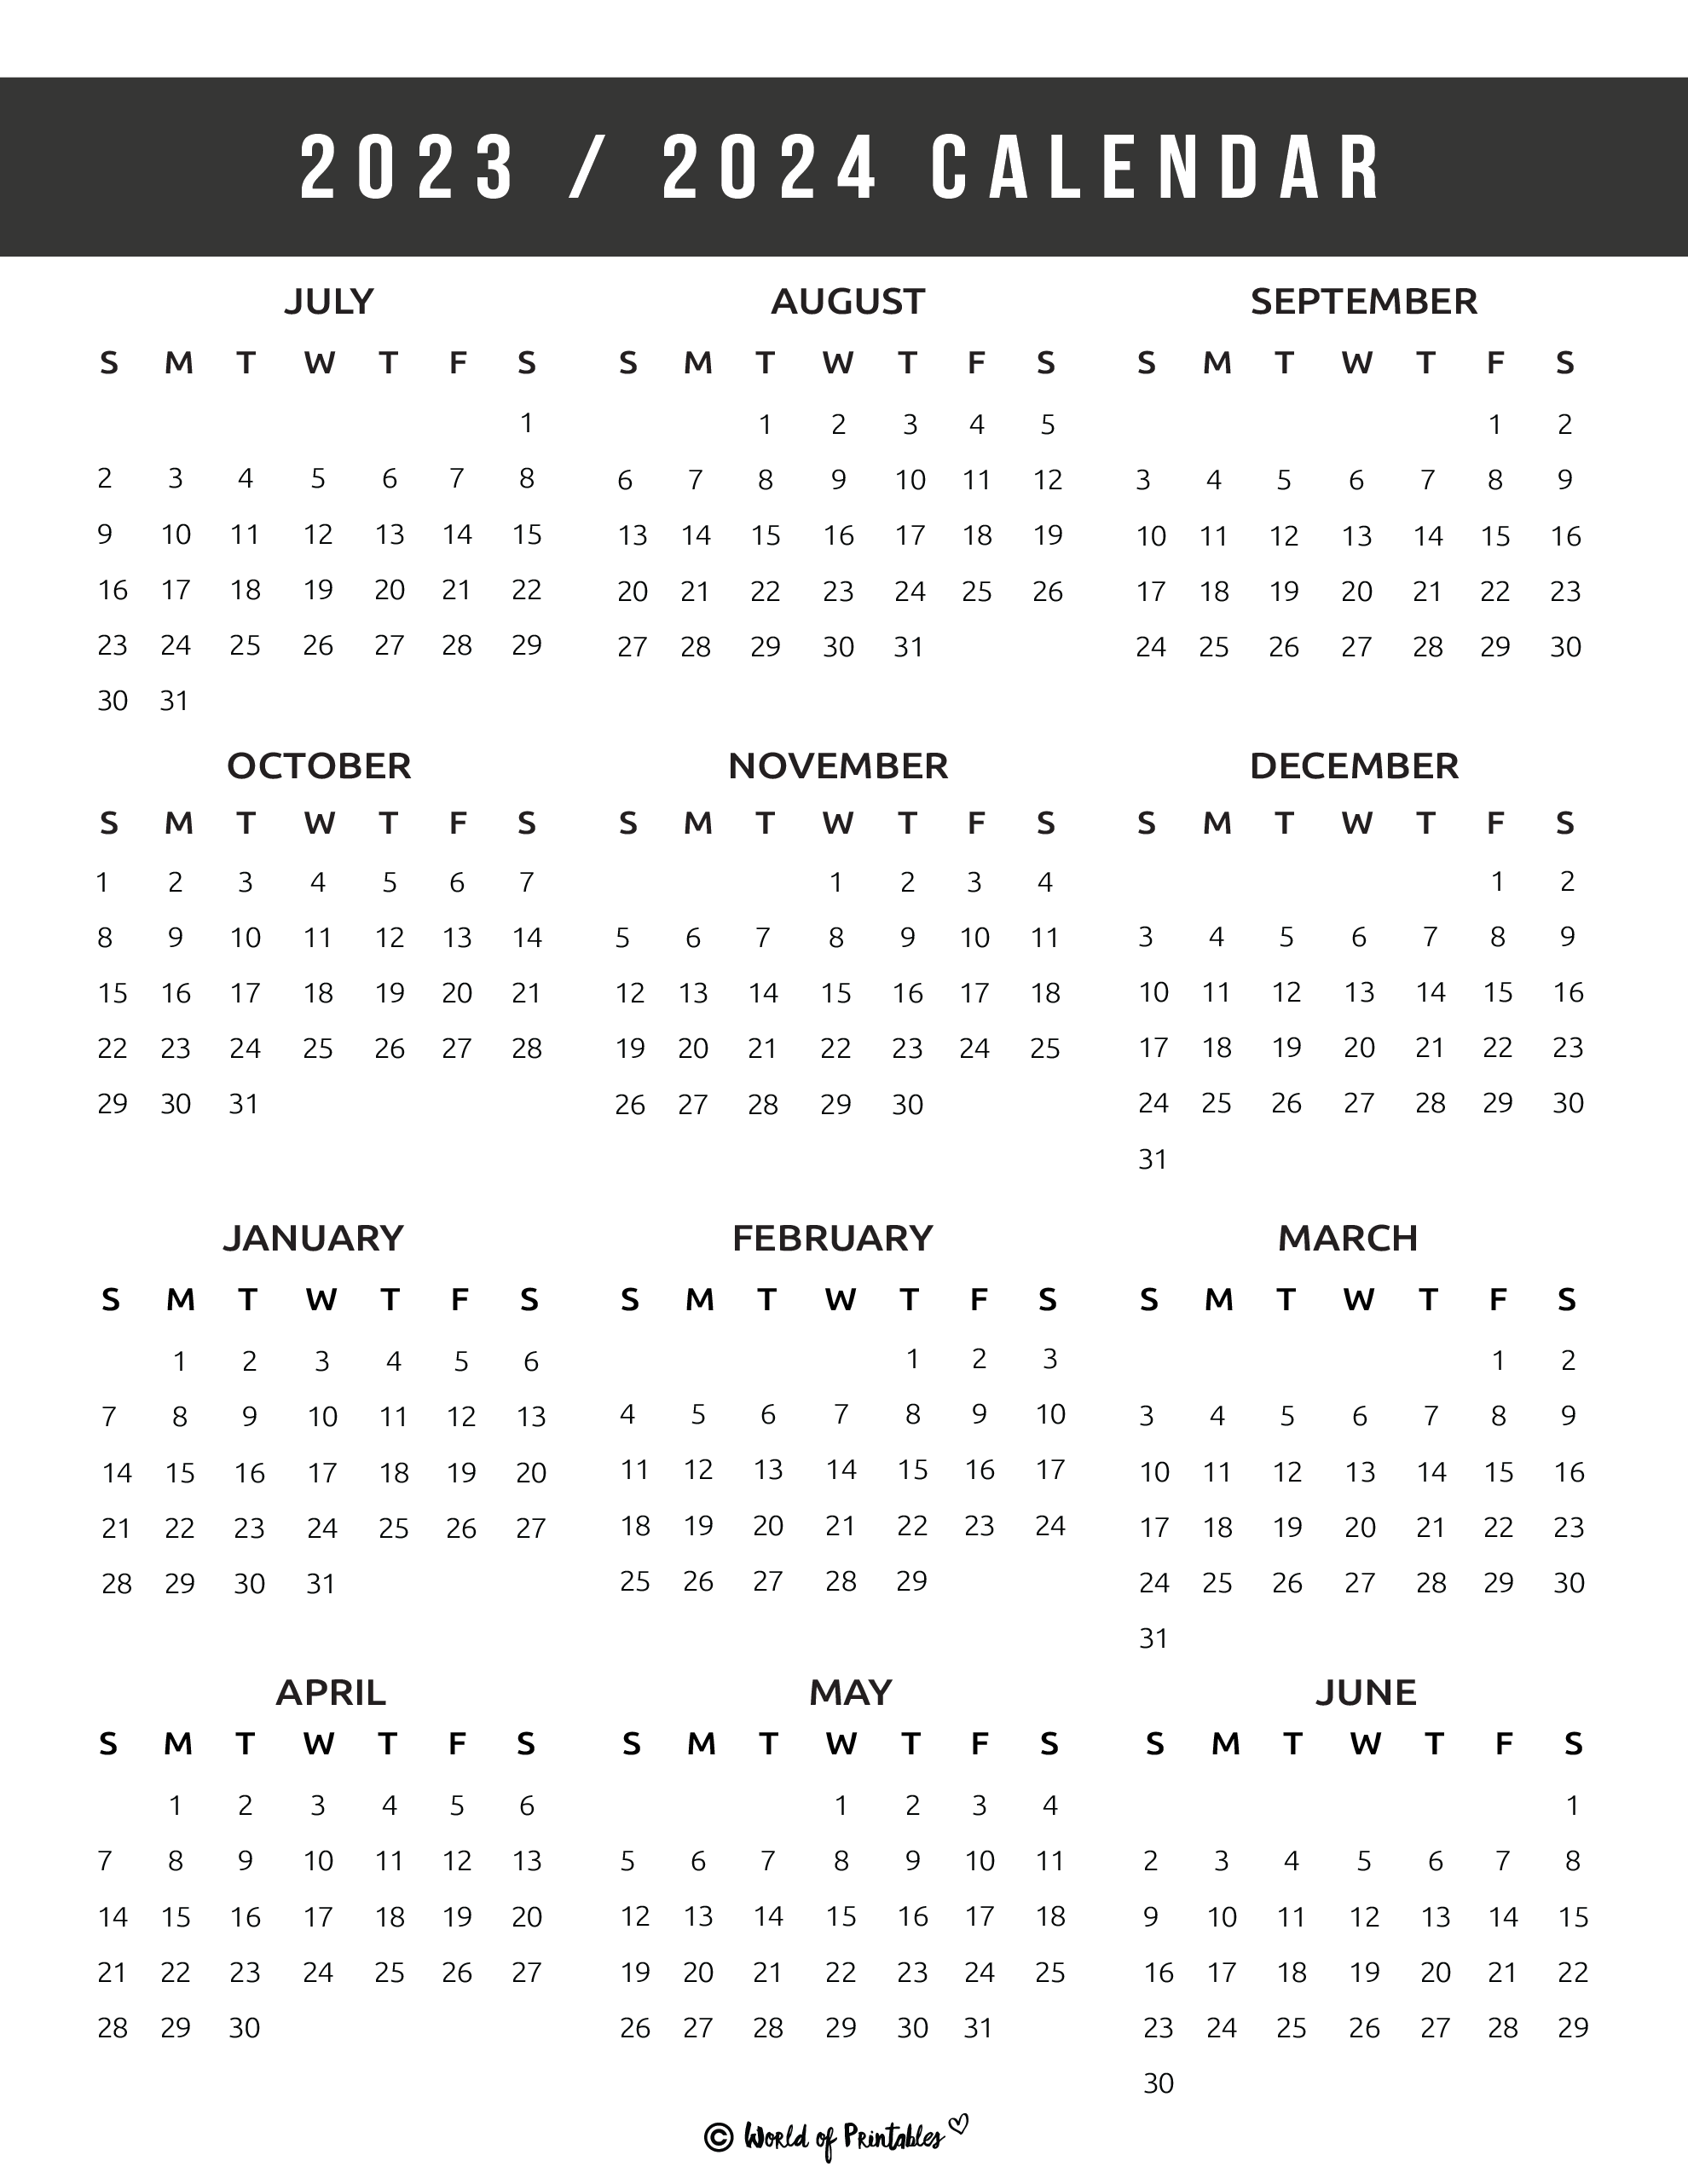 2023 2024 Calendar Free Printables - World Of Printables inside June 2023 - May 2024 Calendar